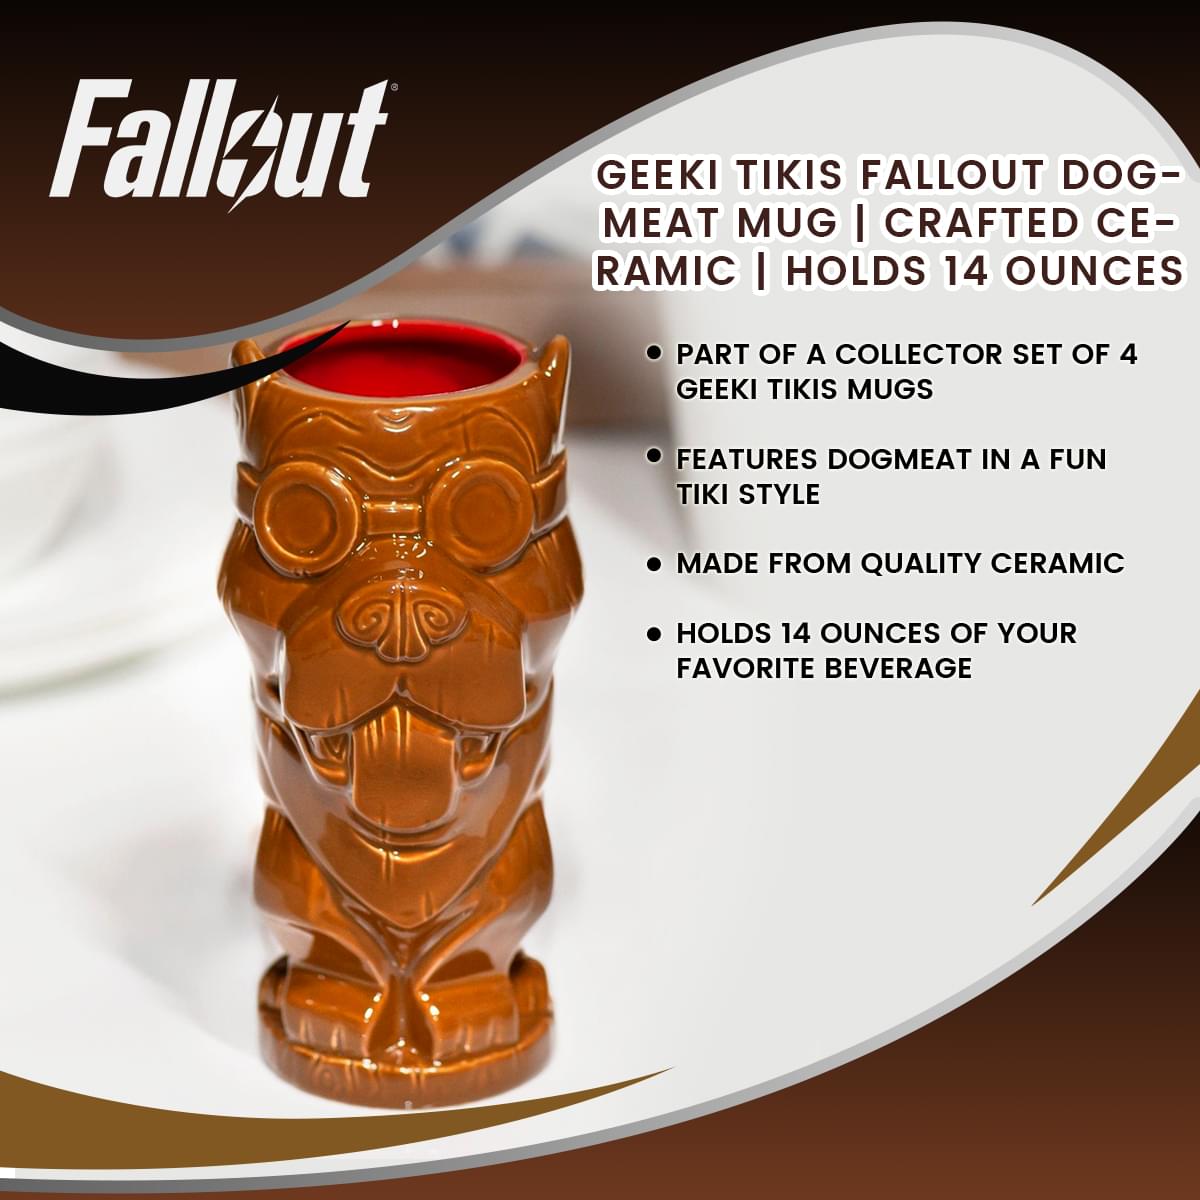 Geeki Tikis Fallout Dogmeat Mug | Crafted Ceramic | Holds 14 Ounces